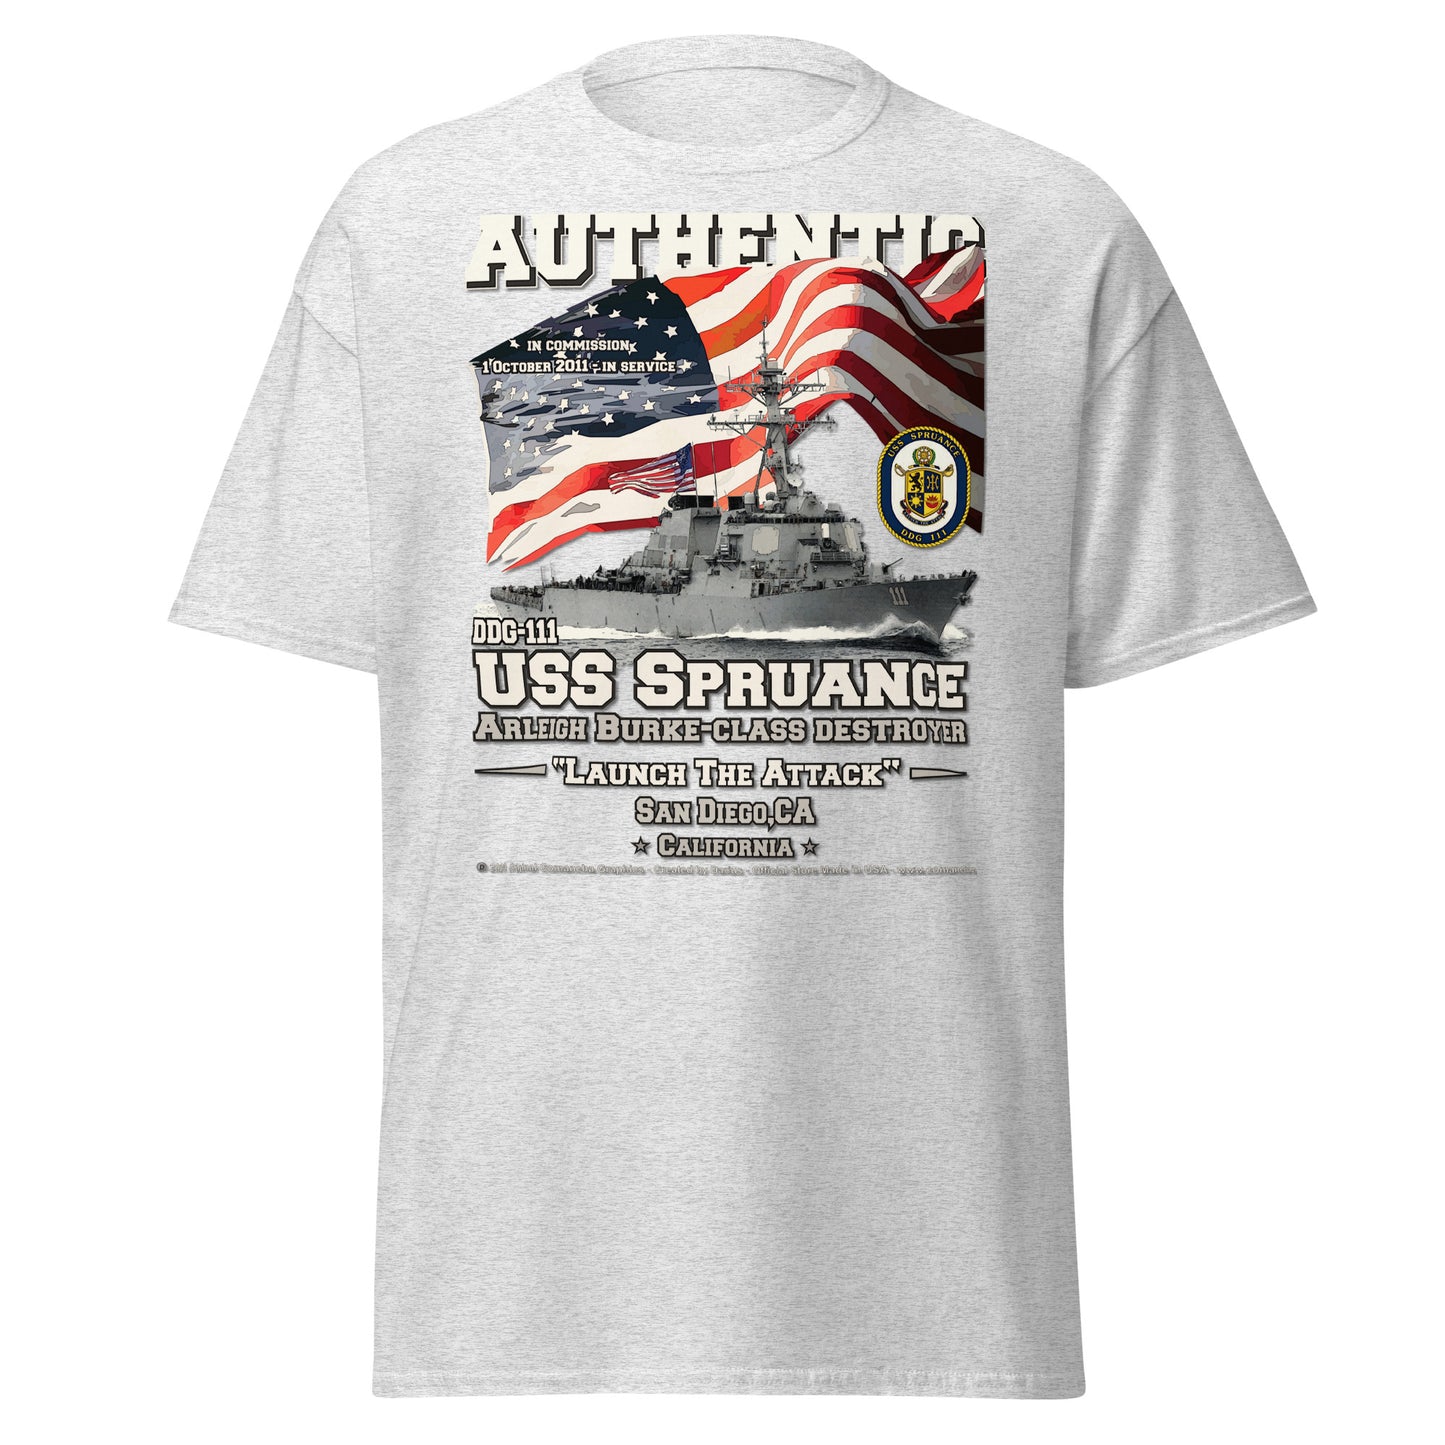 USS SPRUANCE SSG-111 Destroyer Veterans T-shirt, Comancha Navy Tees,